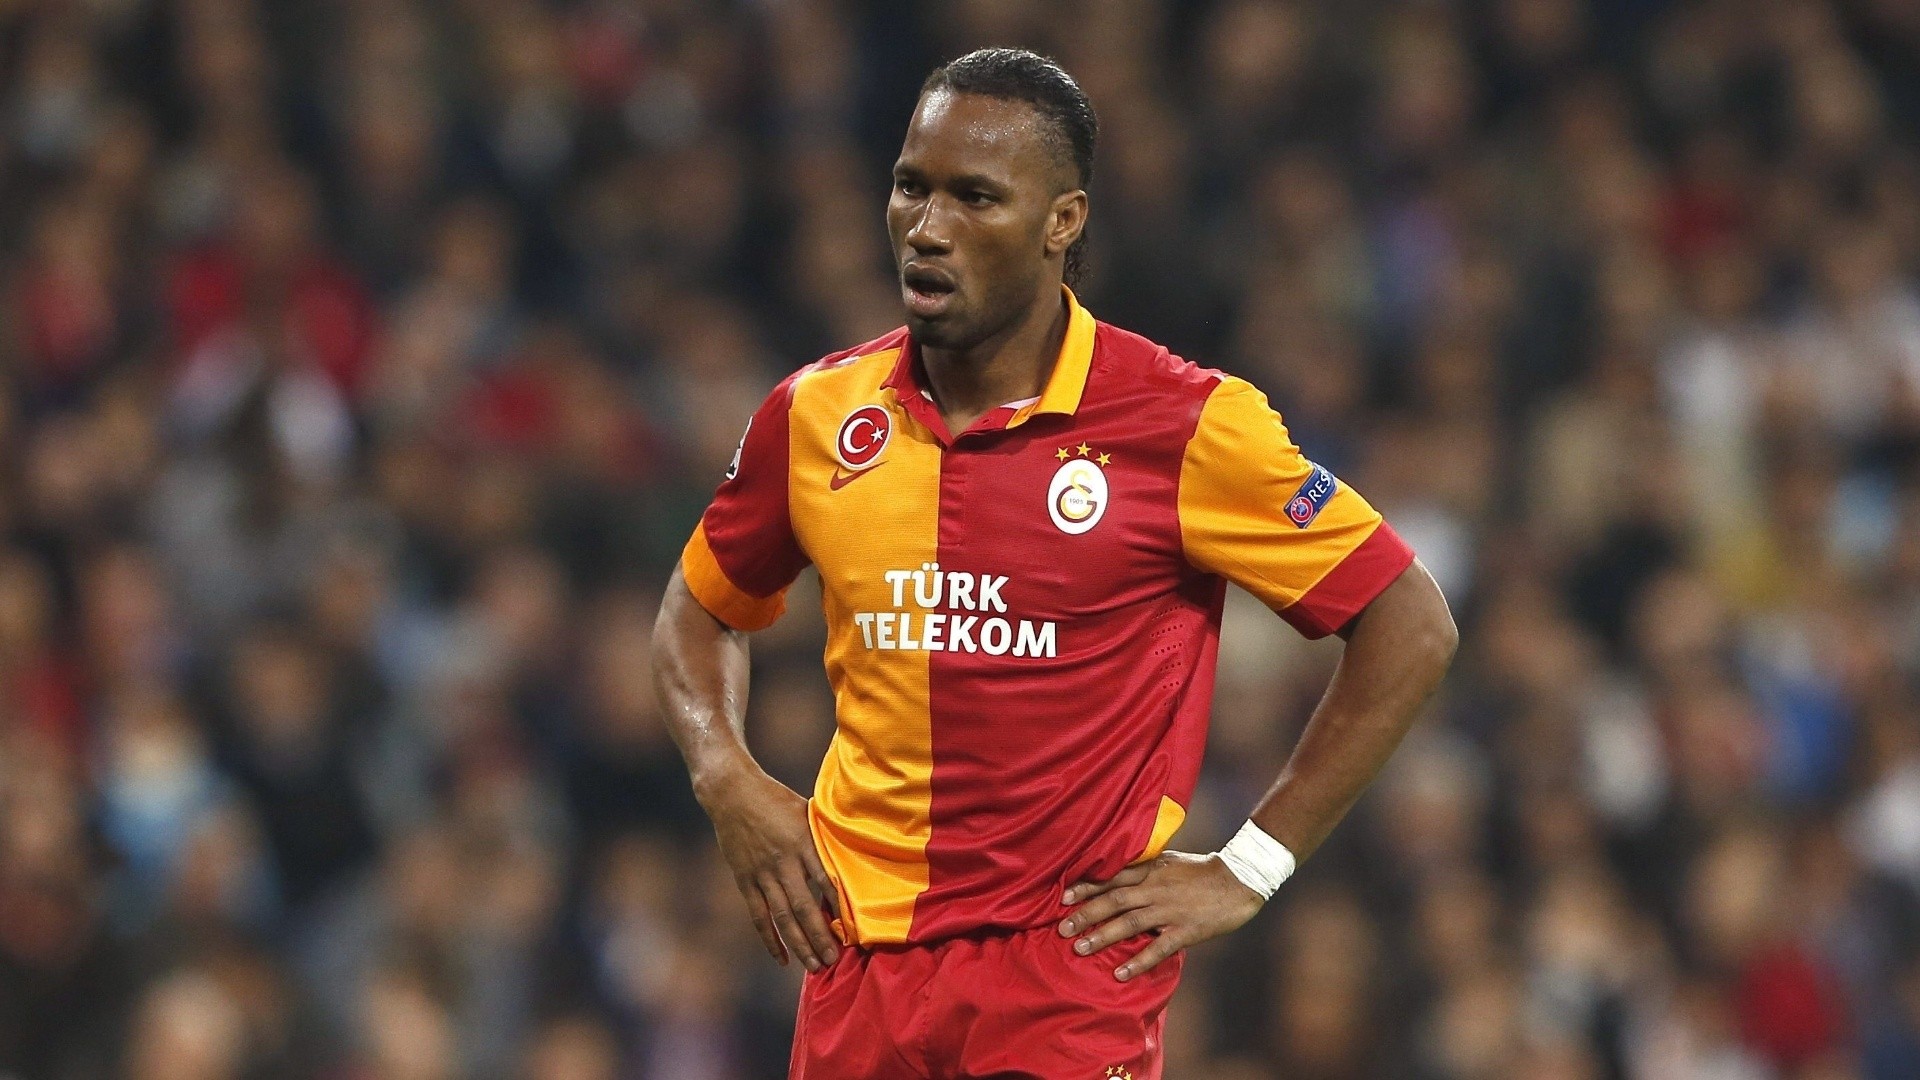 Drogba veut Cheikhou Kouyaté à Galatasaray